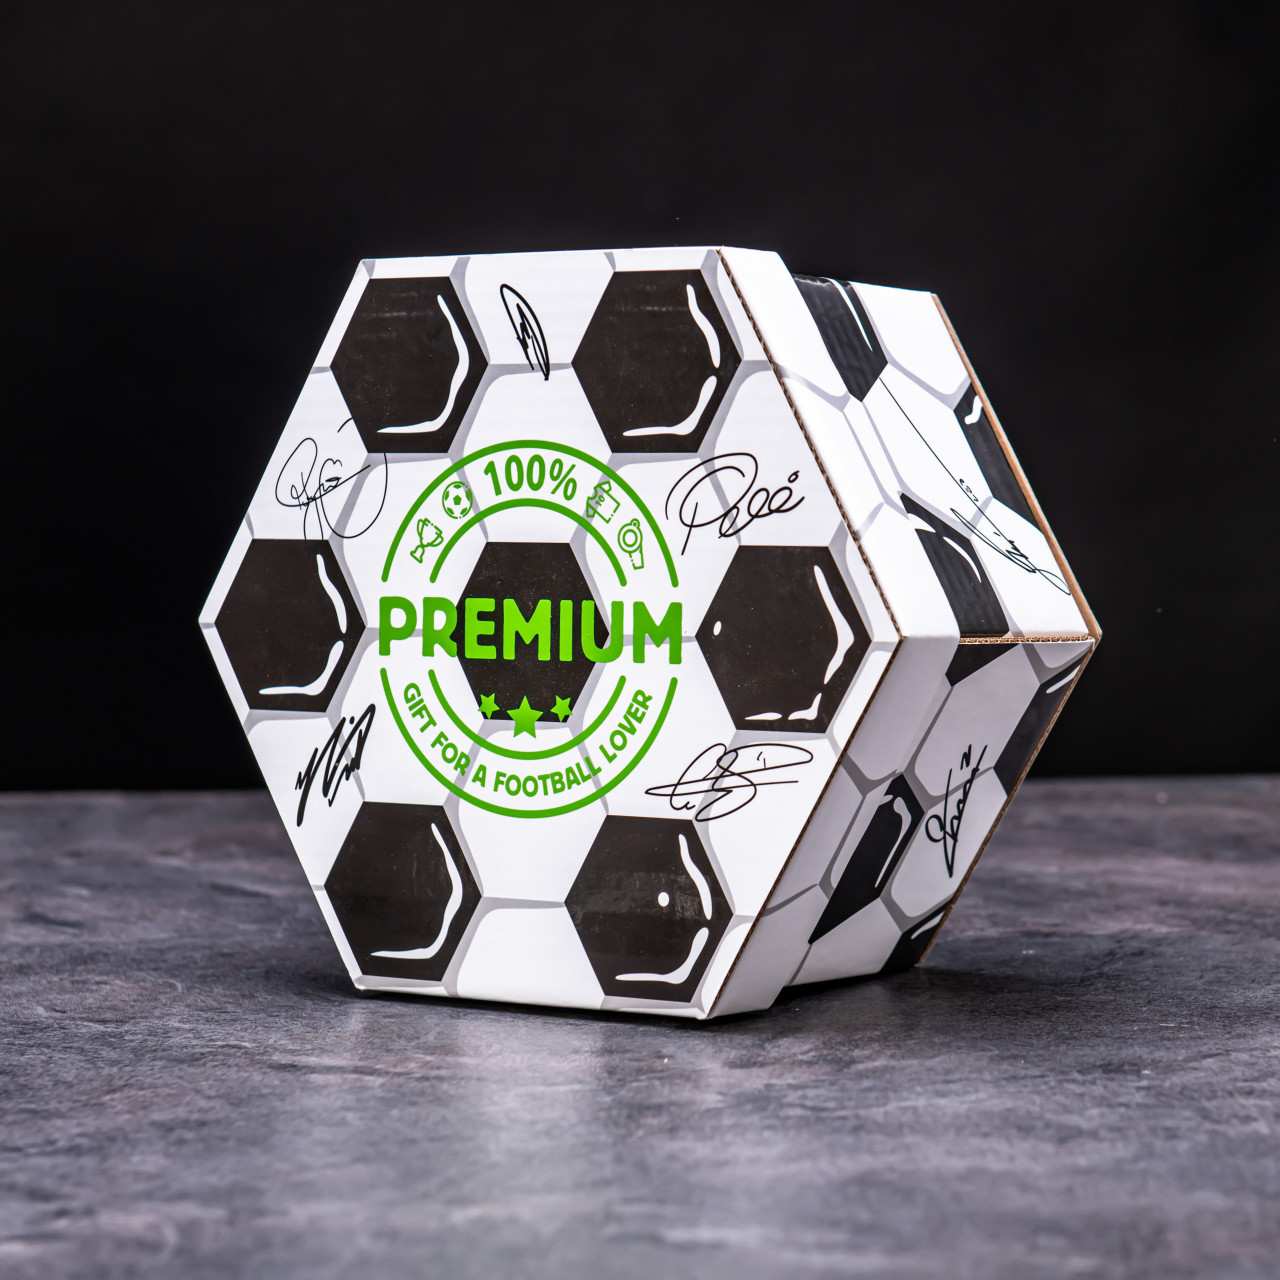 Hexagon plný kvalitní kosmetiky Kokos a Argan - Fotbalový